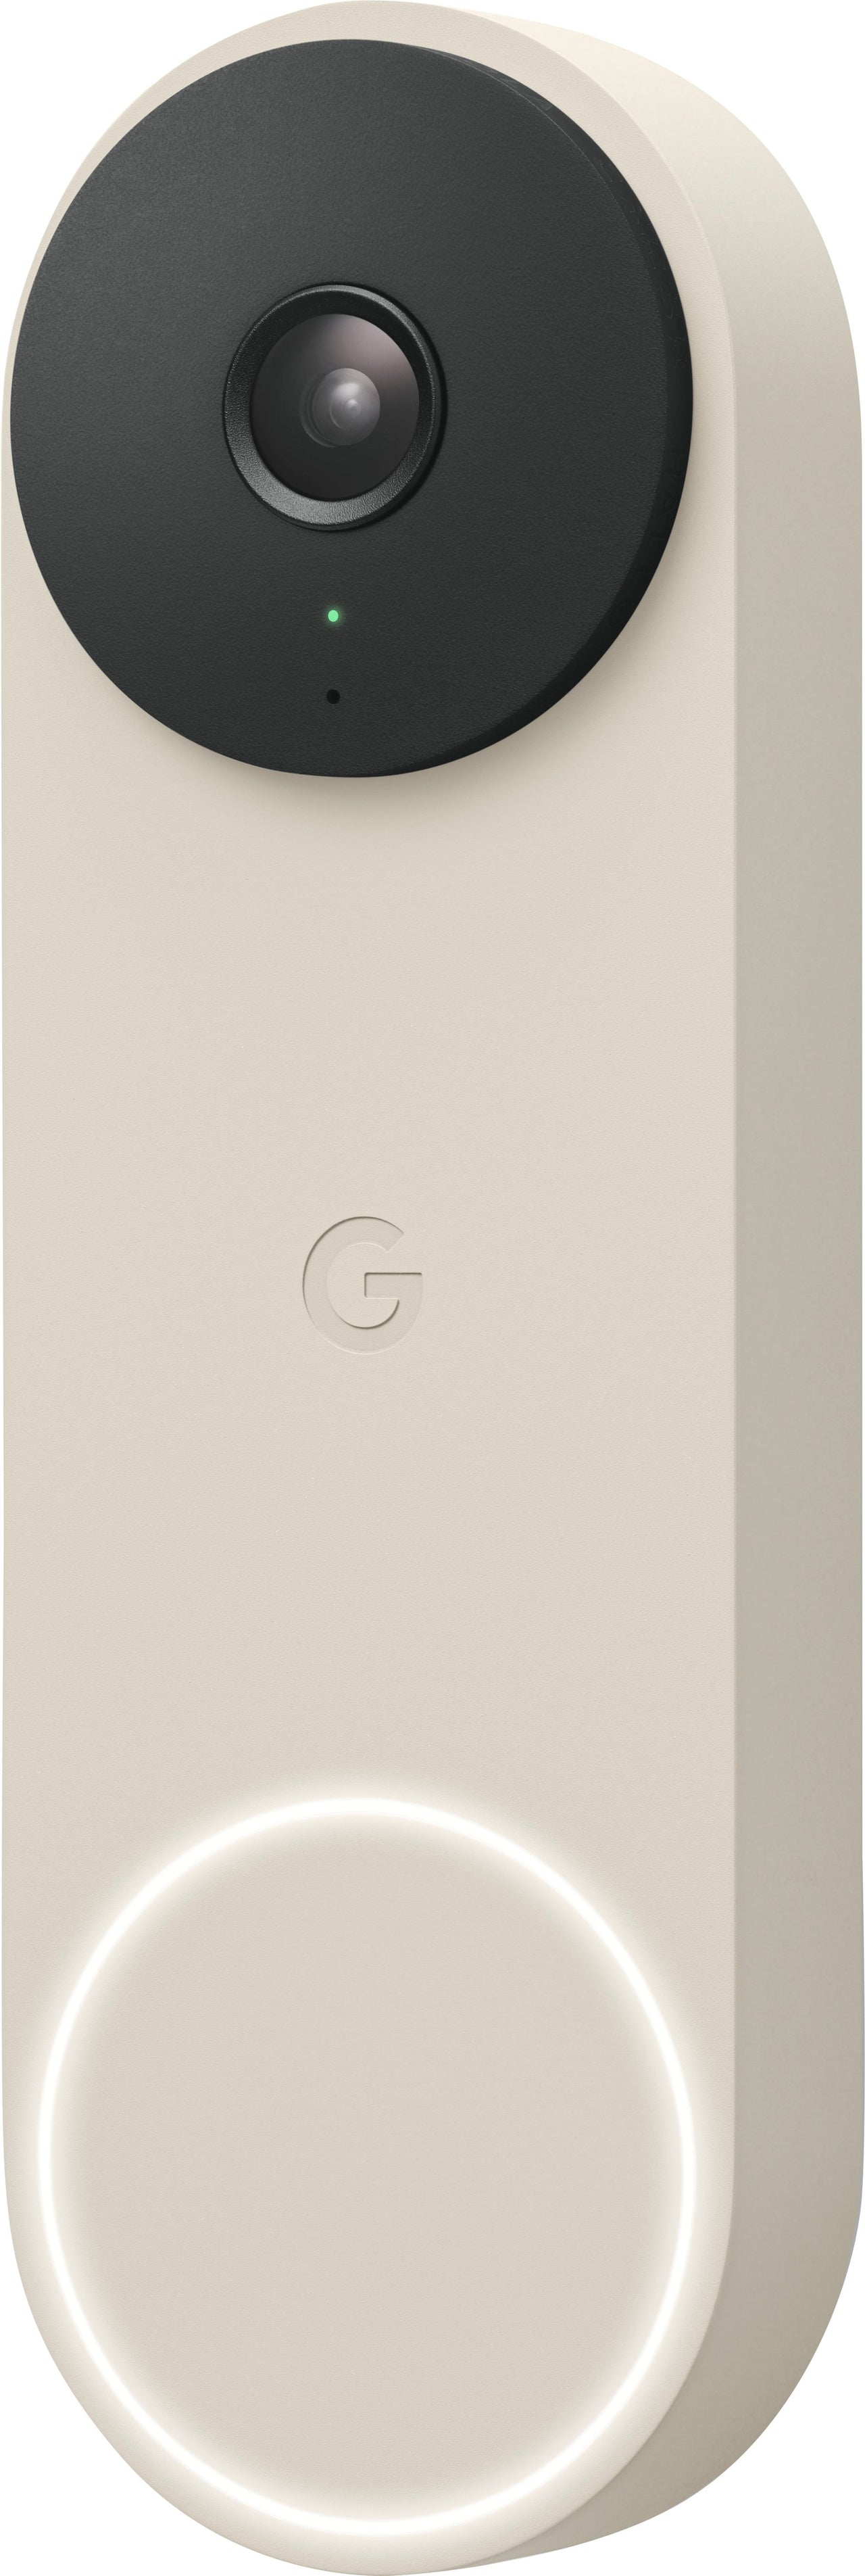 Google - Geek Squad Certified Refurbished Nest Doorbell Wired (2nd Generation) - Linen